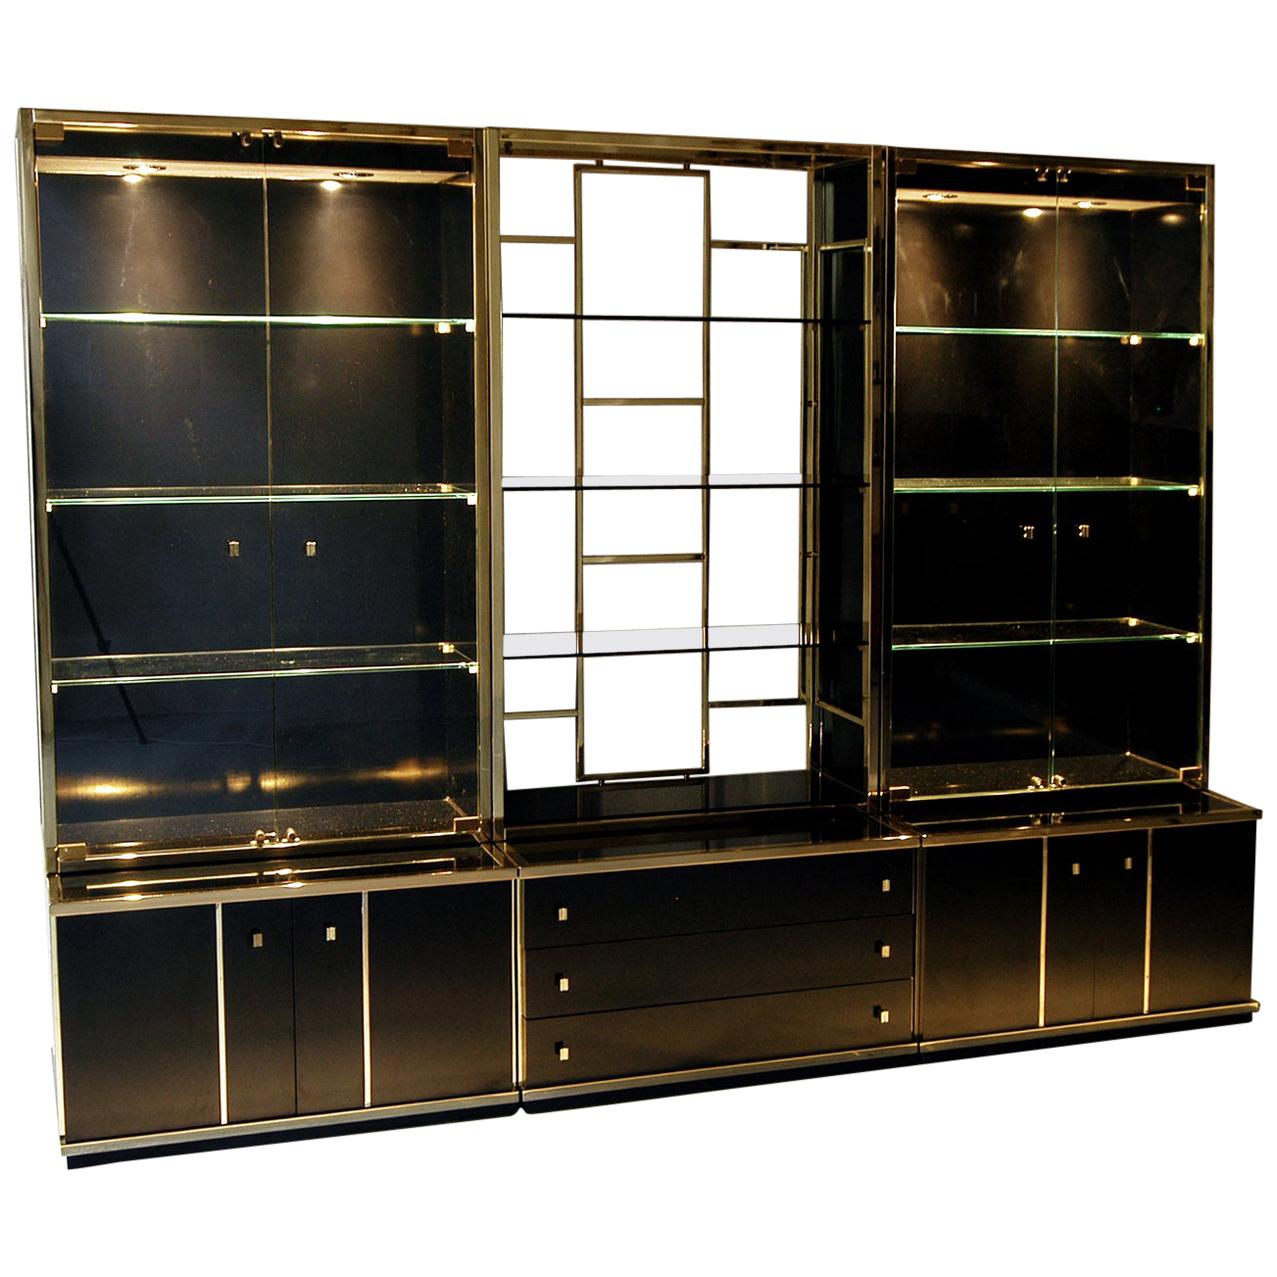 Original 1970s Italian Brass and Black Gloss Wall System Cabinets by Renato Zevi